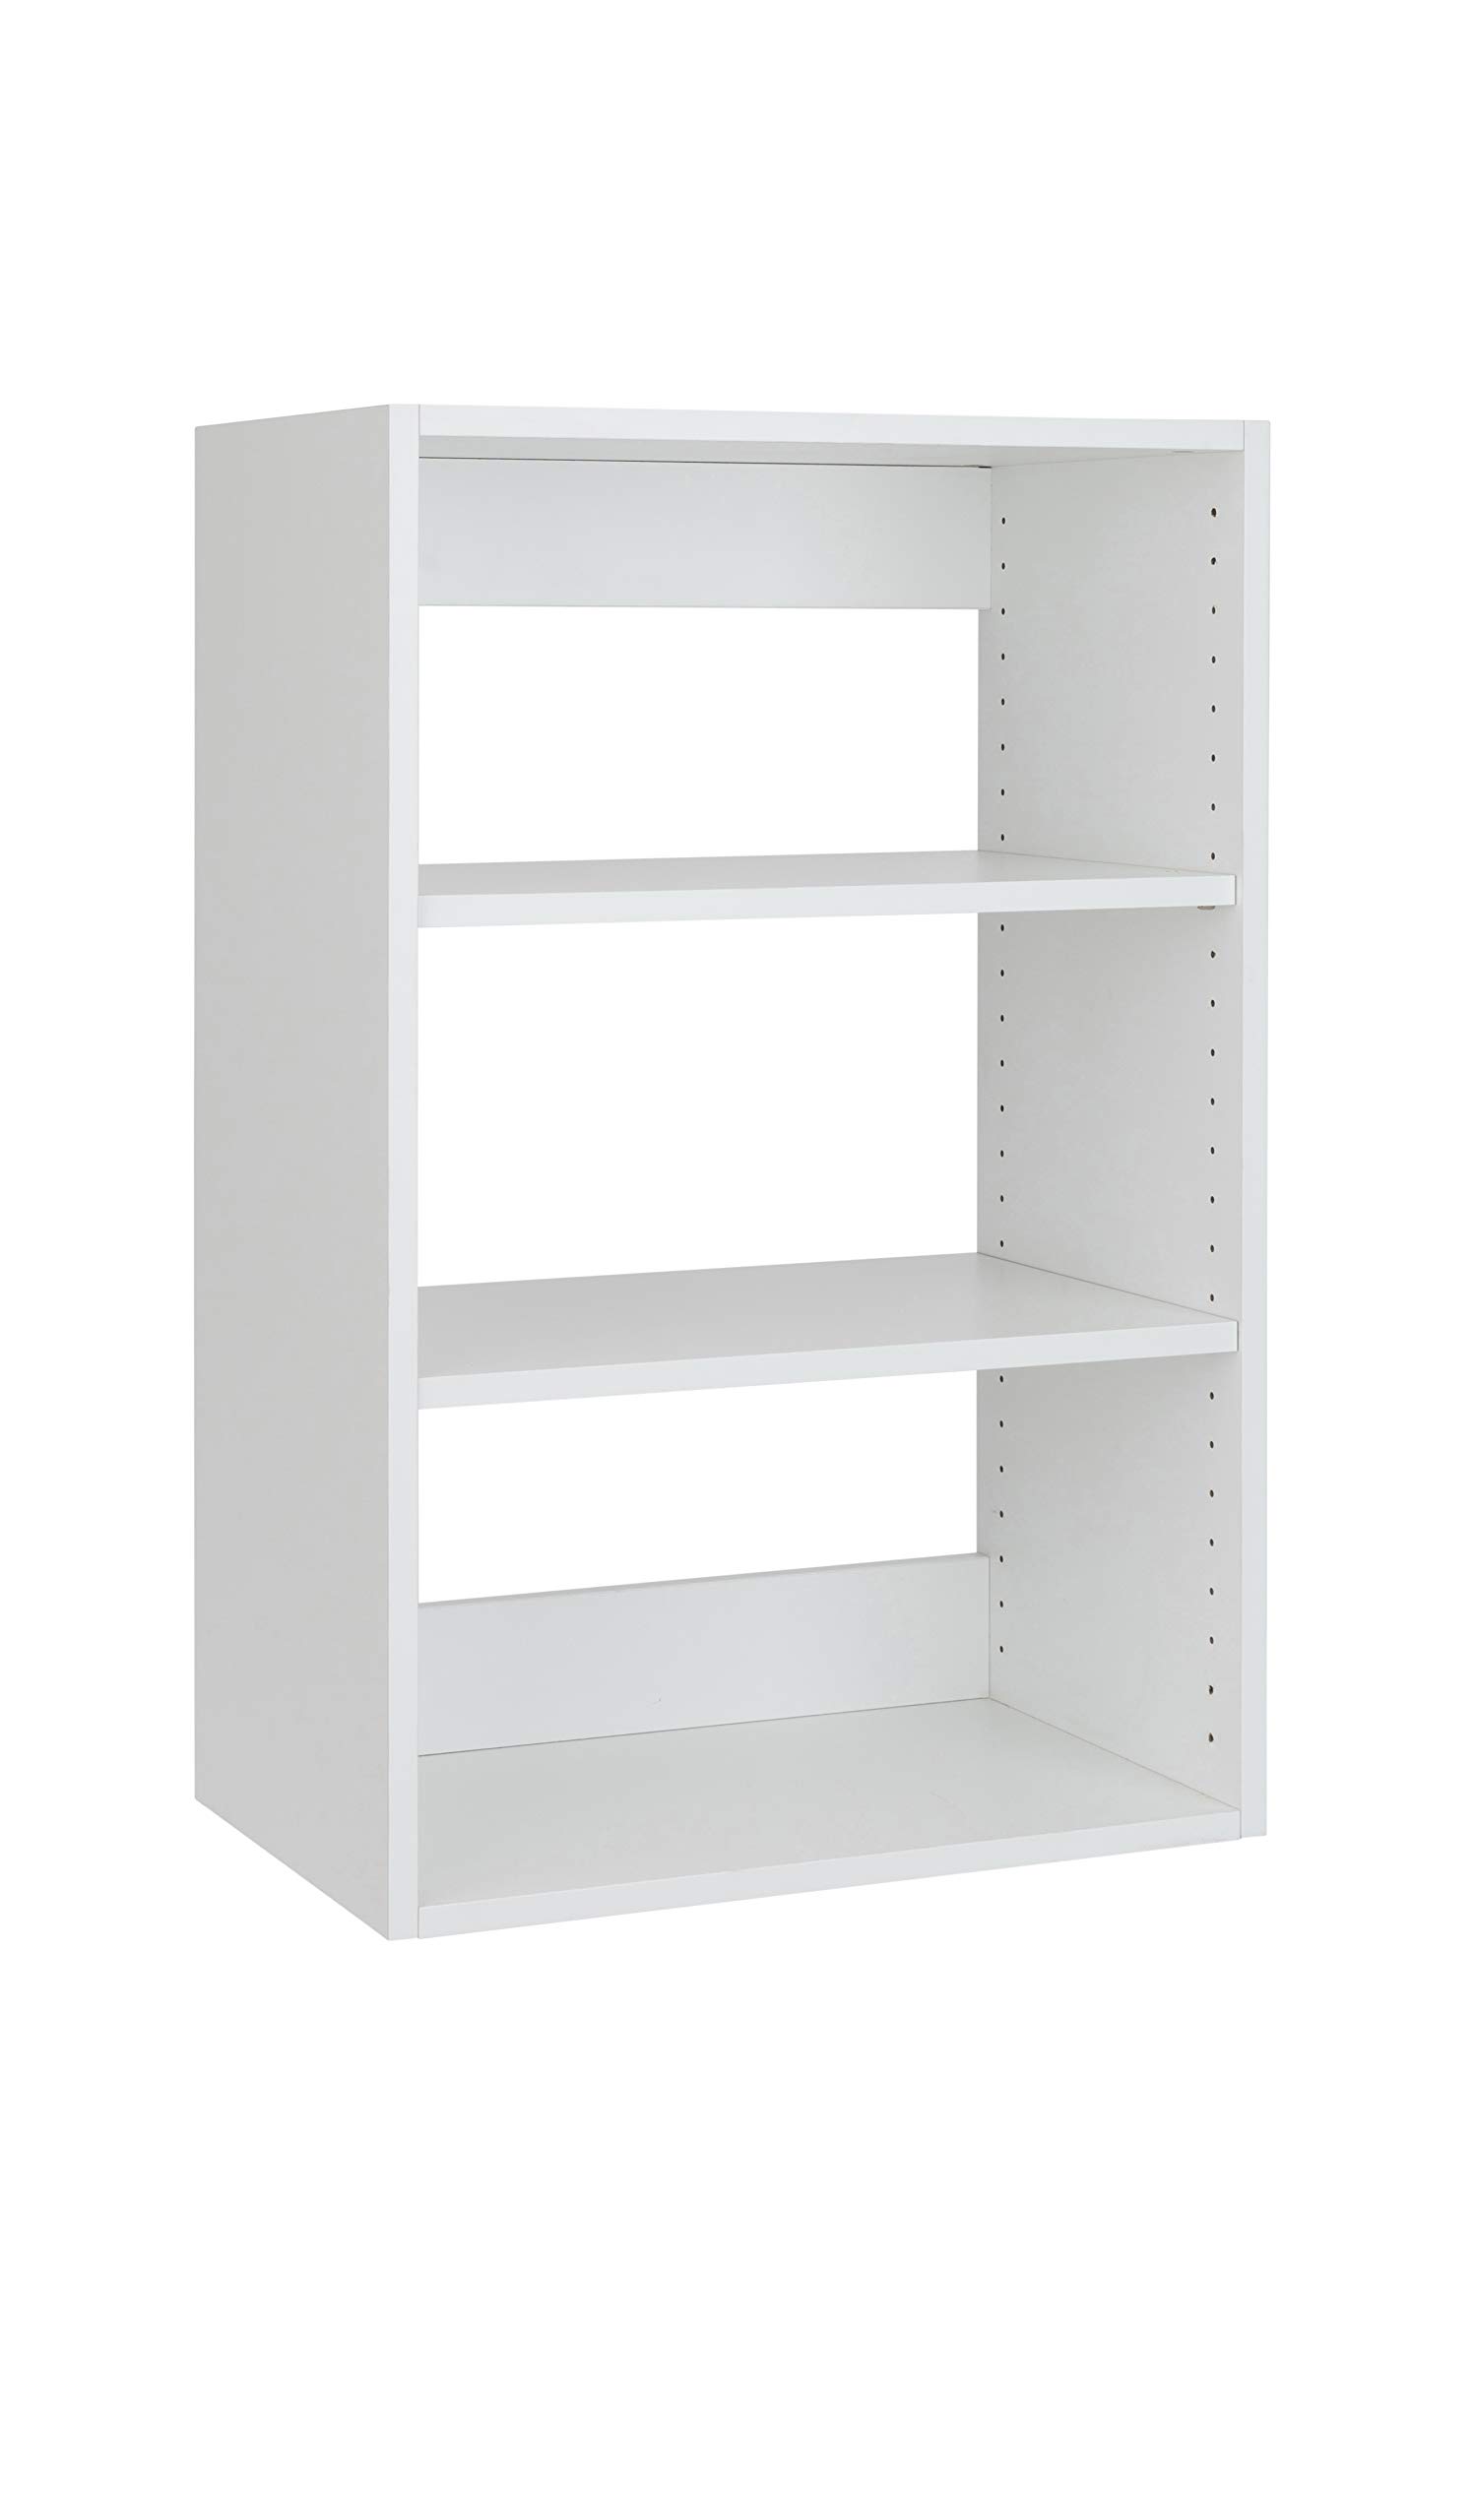 Modular Closets Vista Collection Short Tower Wood Built In Closet Organizer Unit (White, 31.5" Wide)